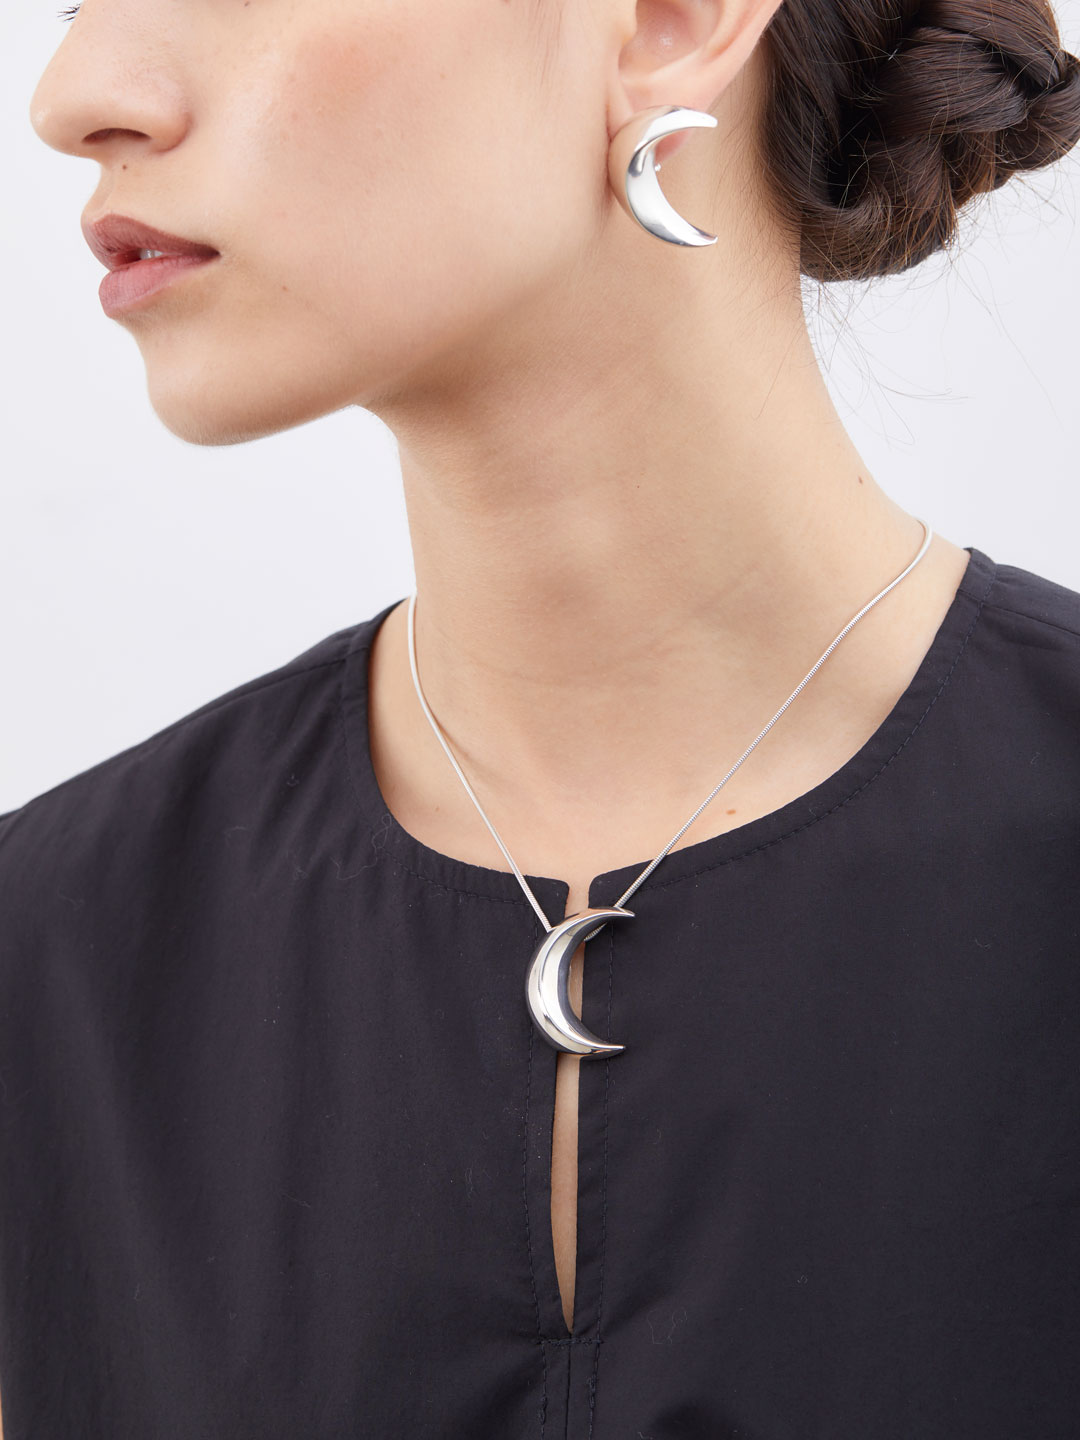 Moon Necklace - Silver